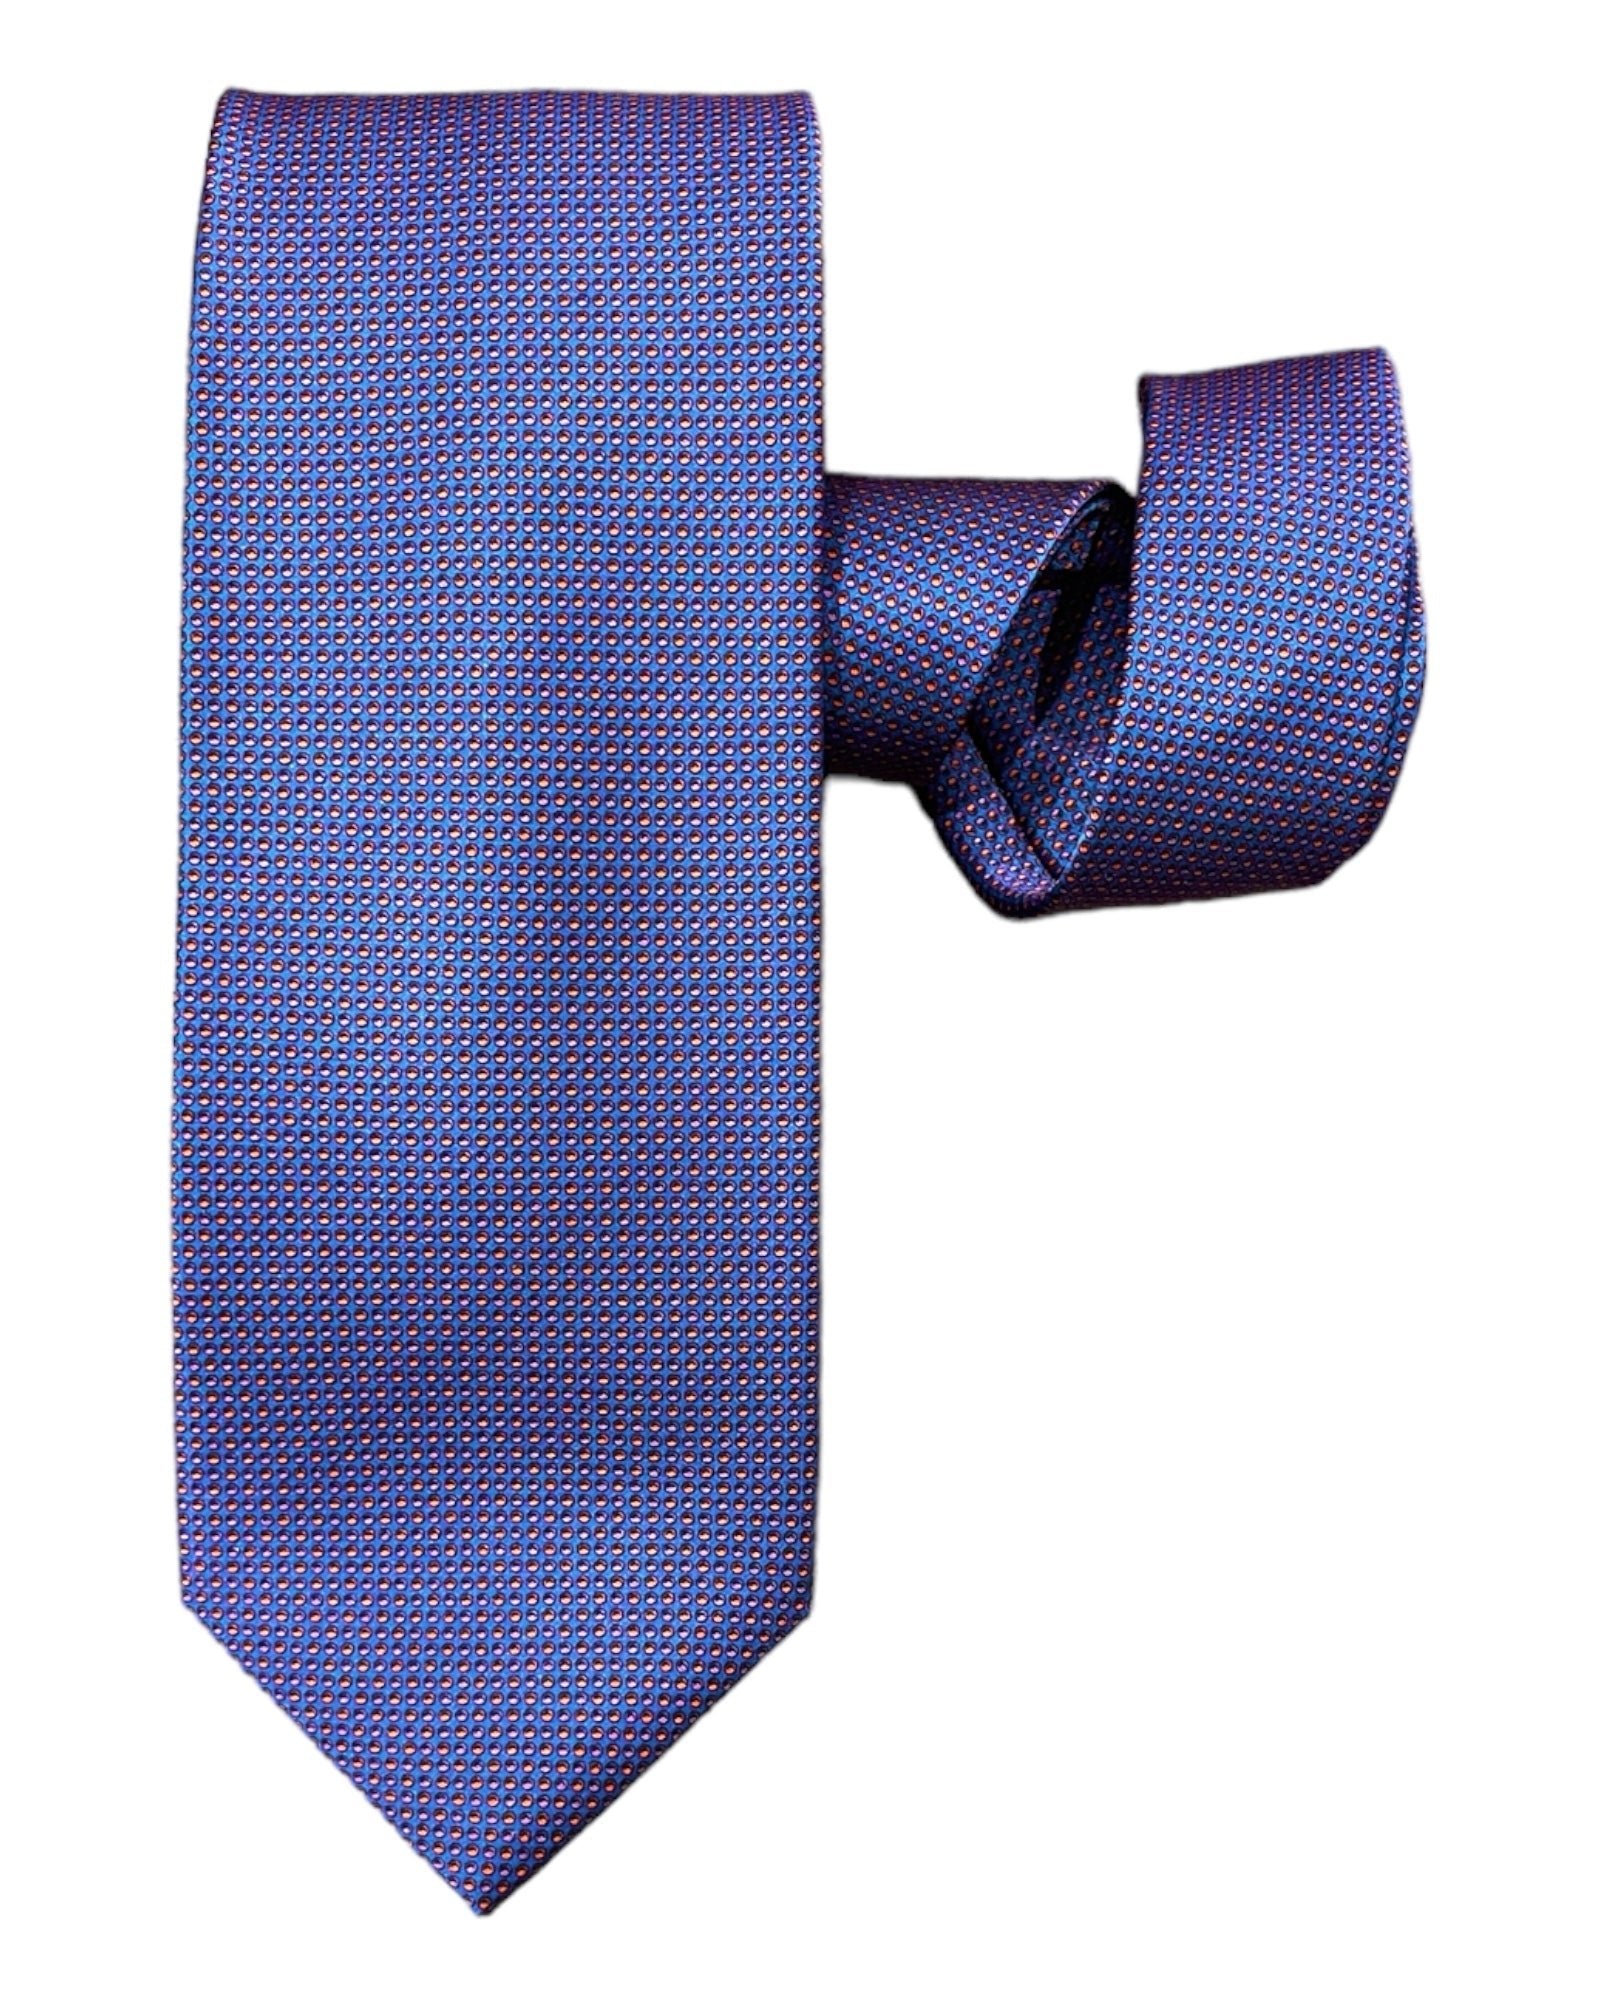 Indigo Blue with Micro Orange dots, Seven-Fold Silk Tie TIESIndigo